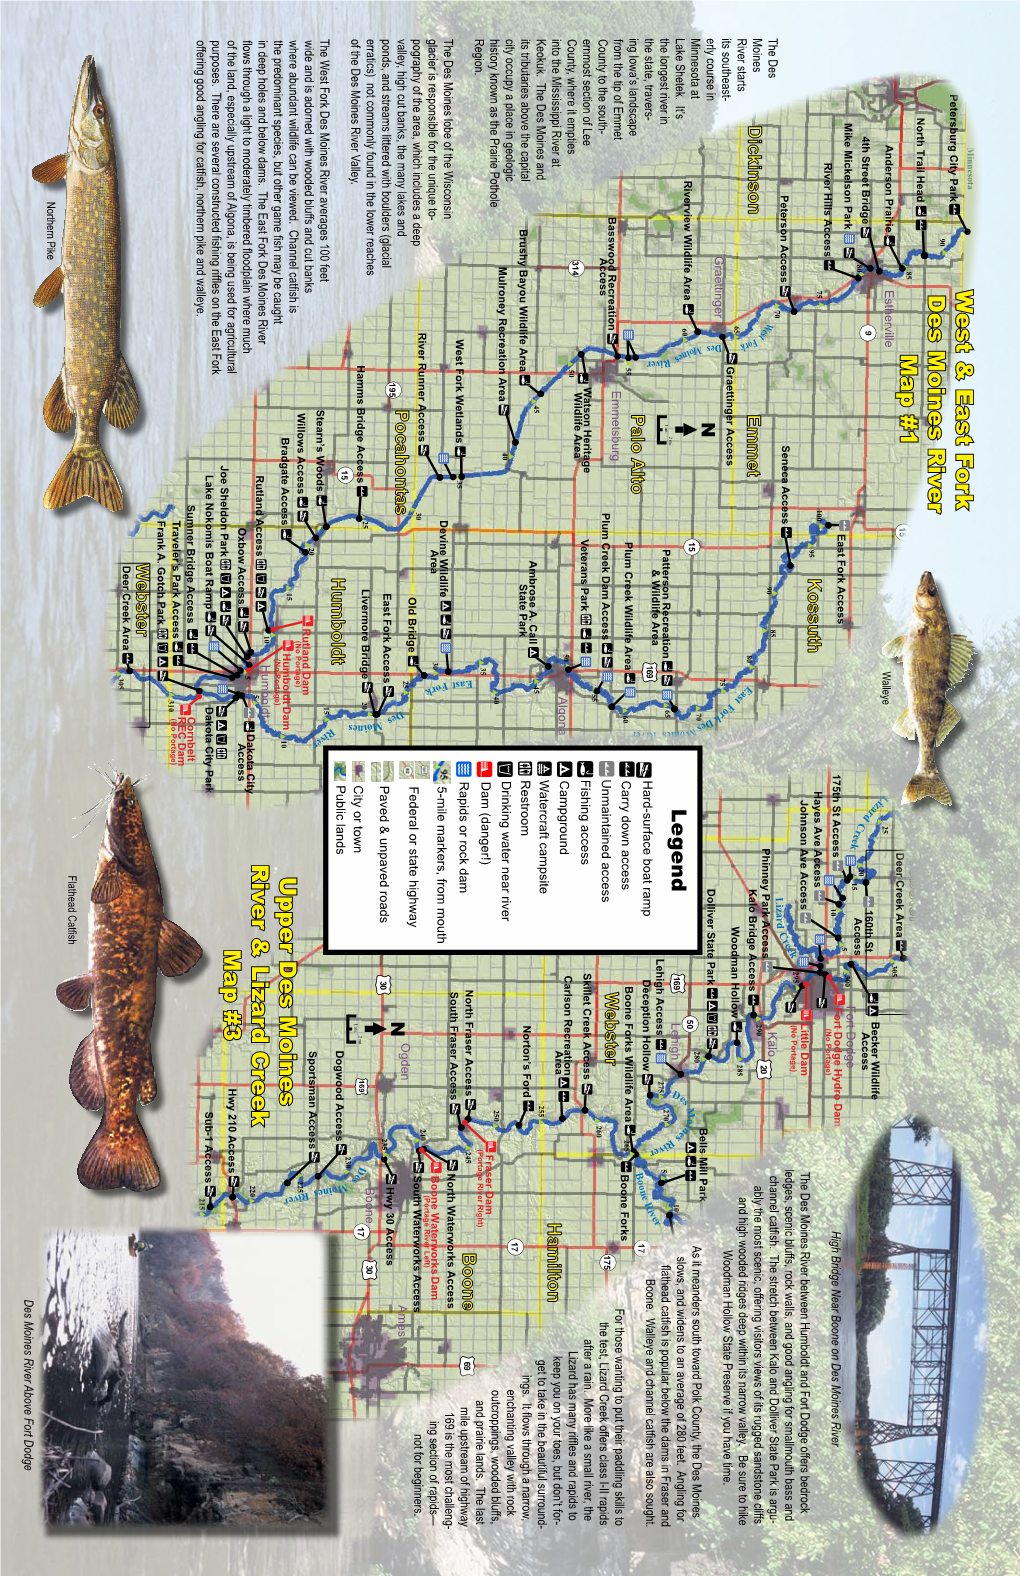 West & East Fork Des Moines River, Upper Des Moines River, Lizard Creek and Boone River